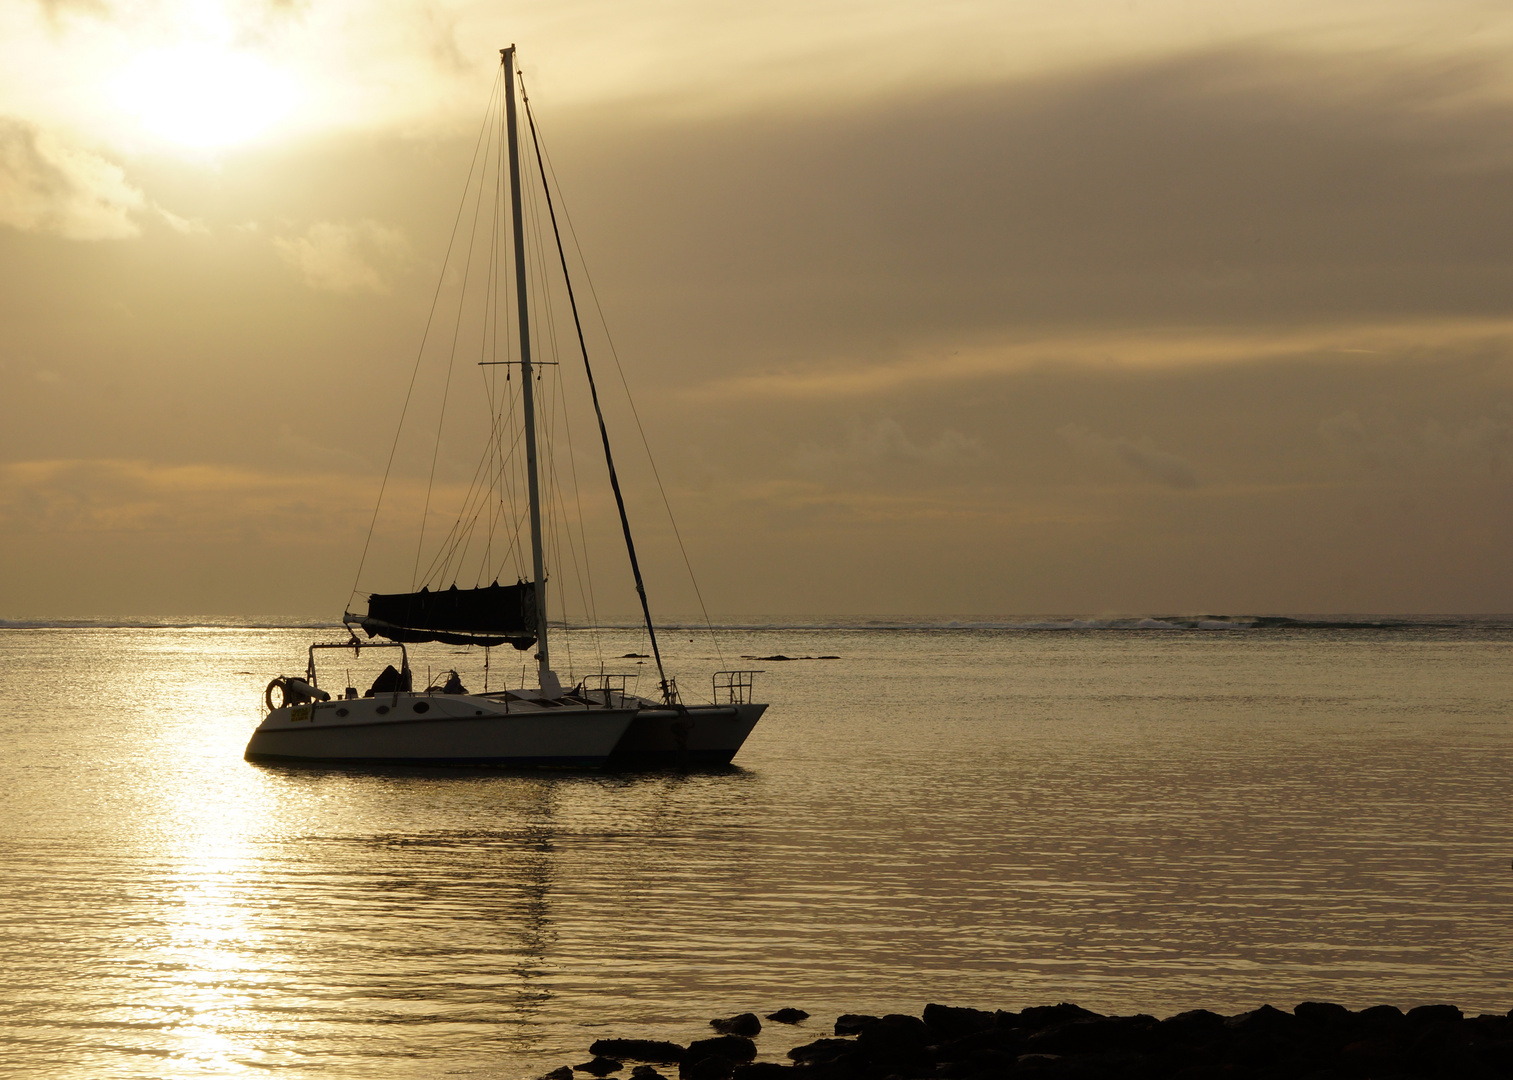 Sonnenuntergang in Mauritius